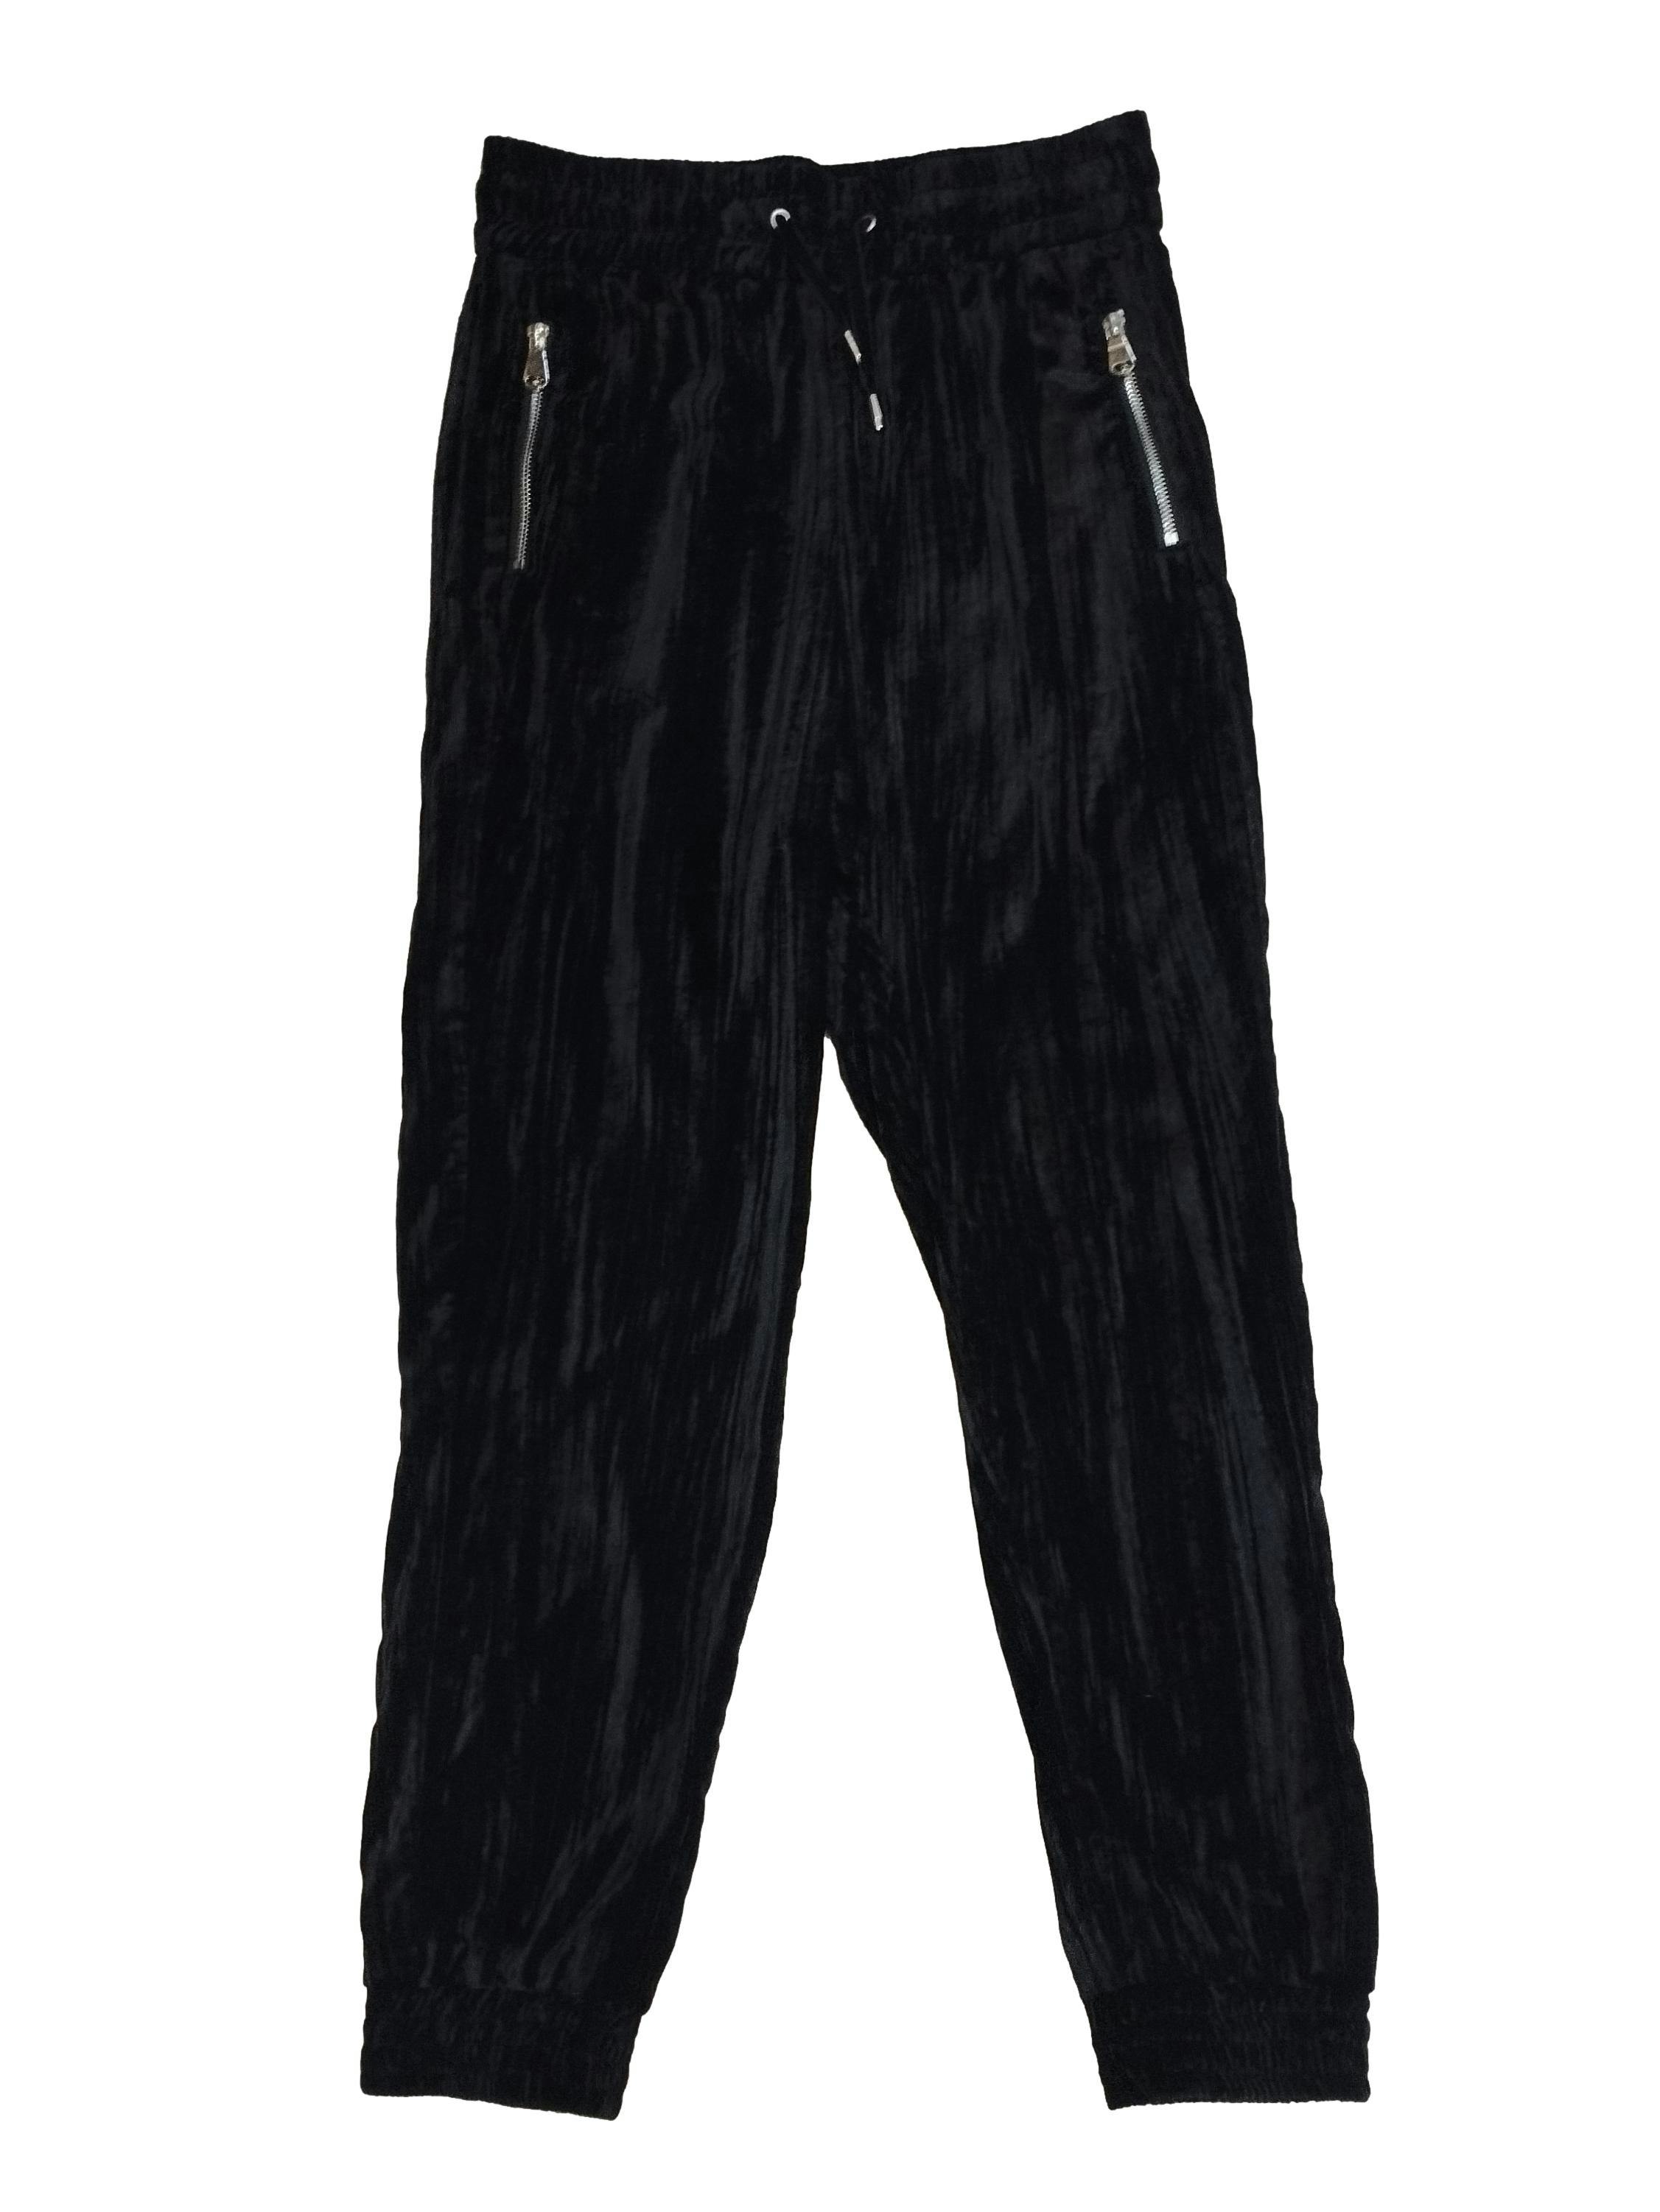 Jogger Zara plush negro, textura acanalada, cintos y bolsillos delanteros. Cintura 76cm sin estirar, Largo 102cm.